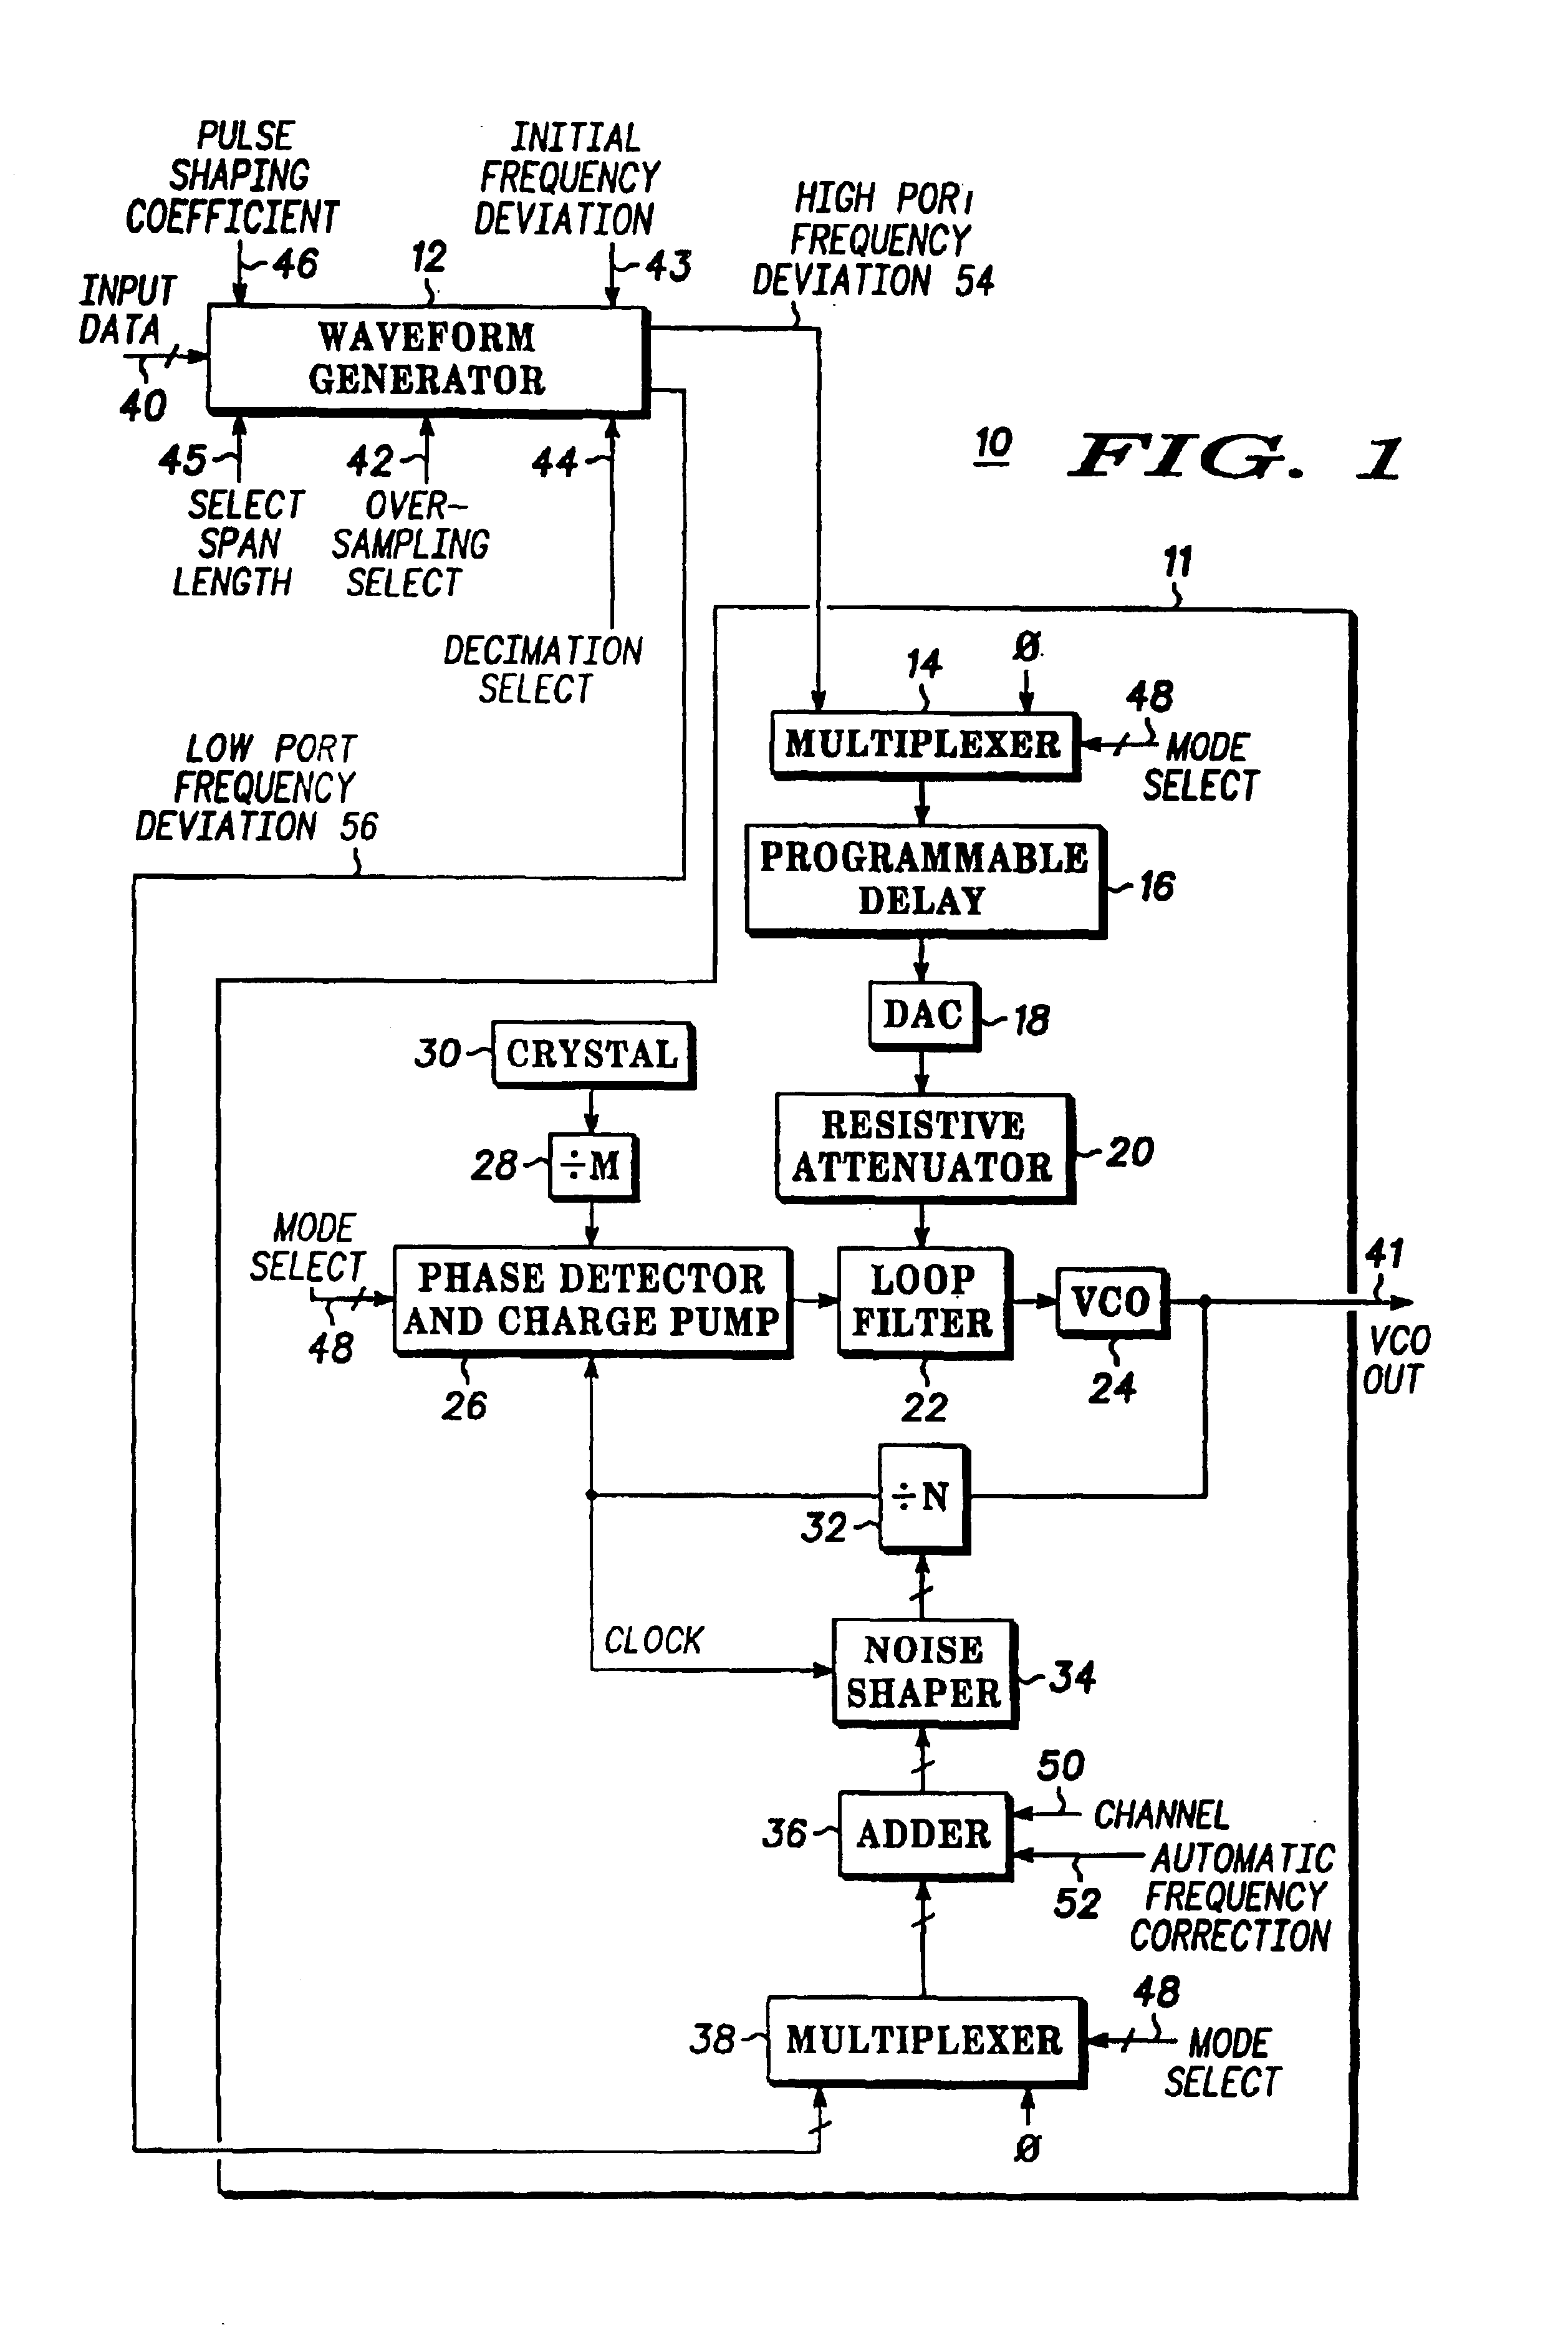 Frequency modulator using a waveform generator